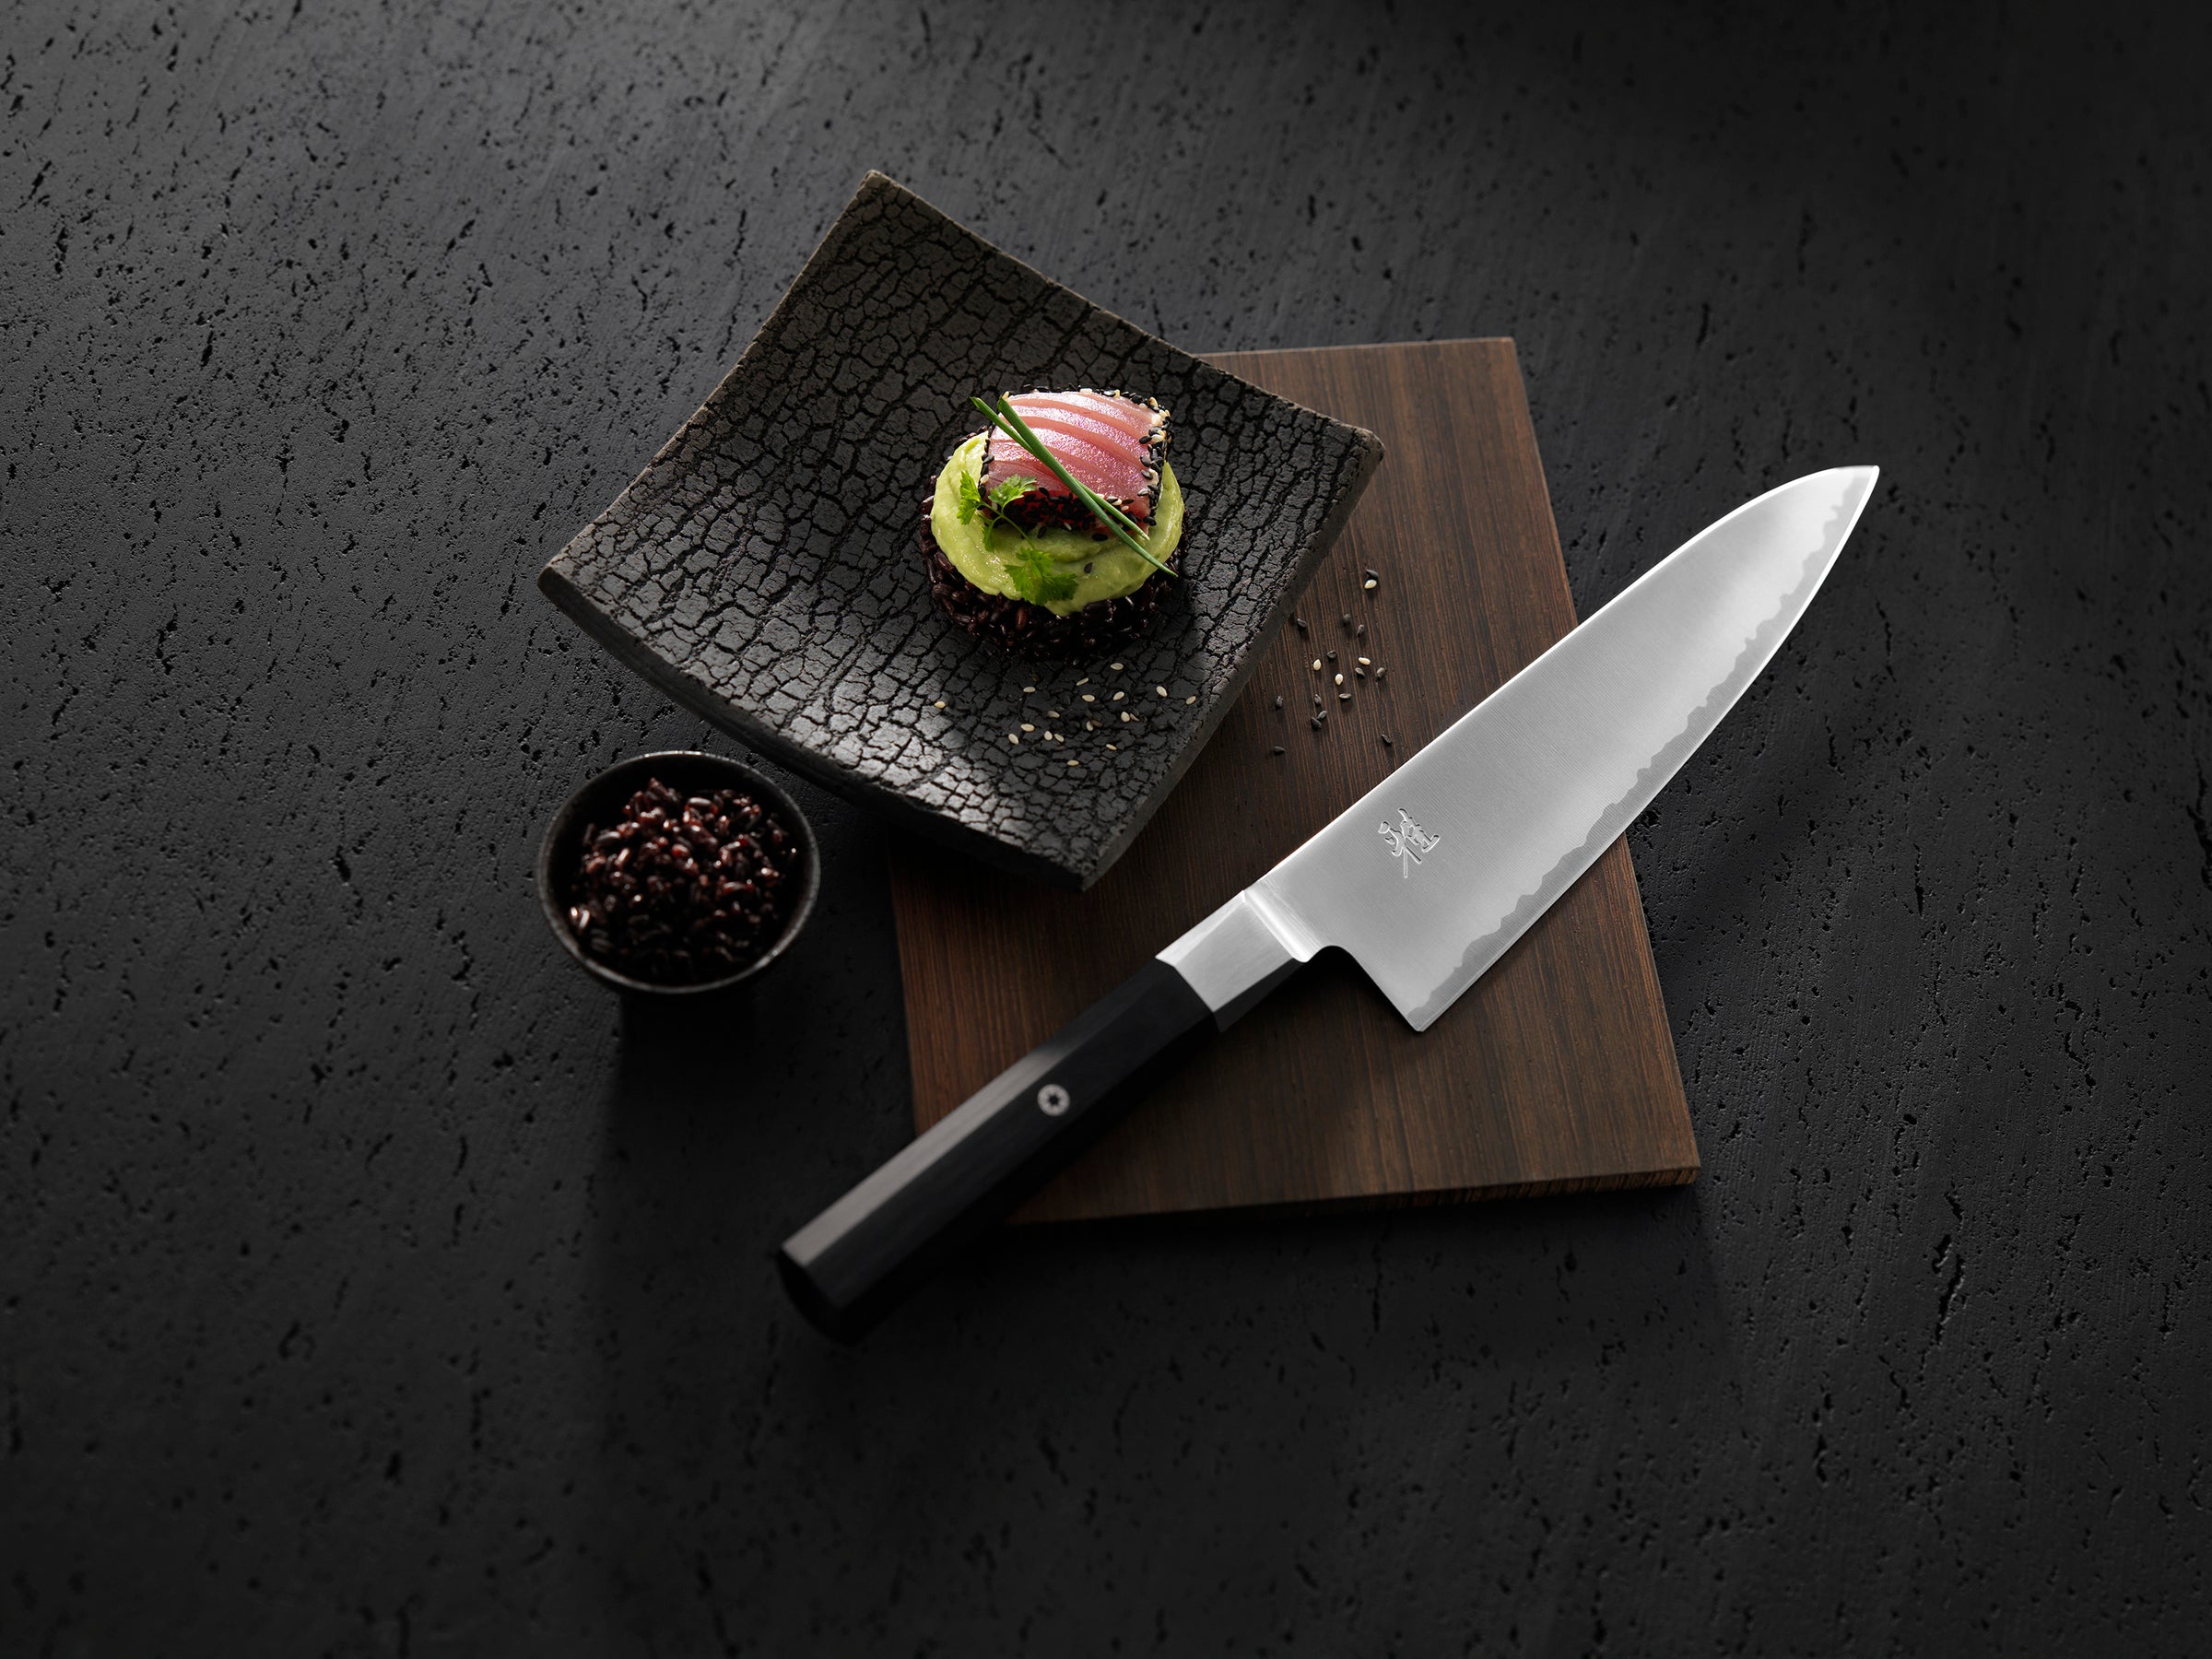 Miyabi Evolution Slicing Knife 9.5-in